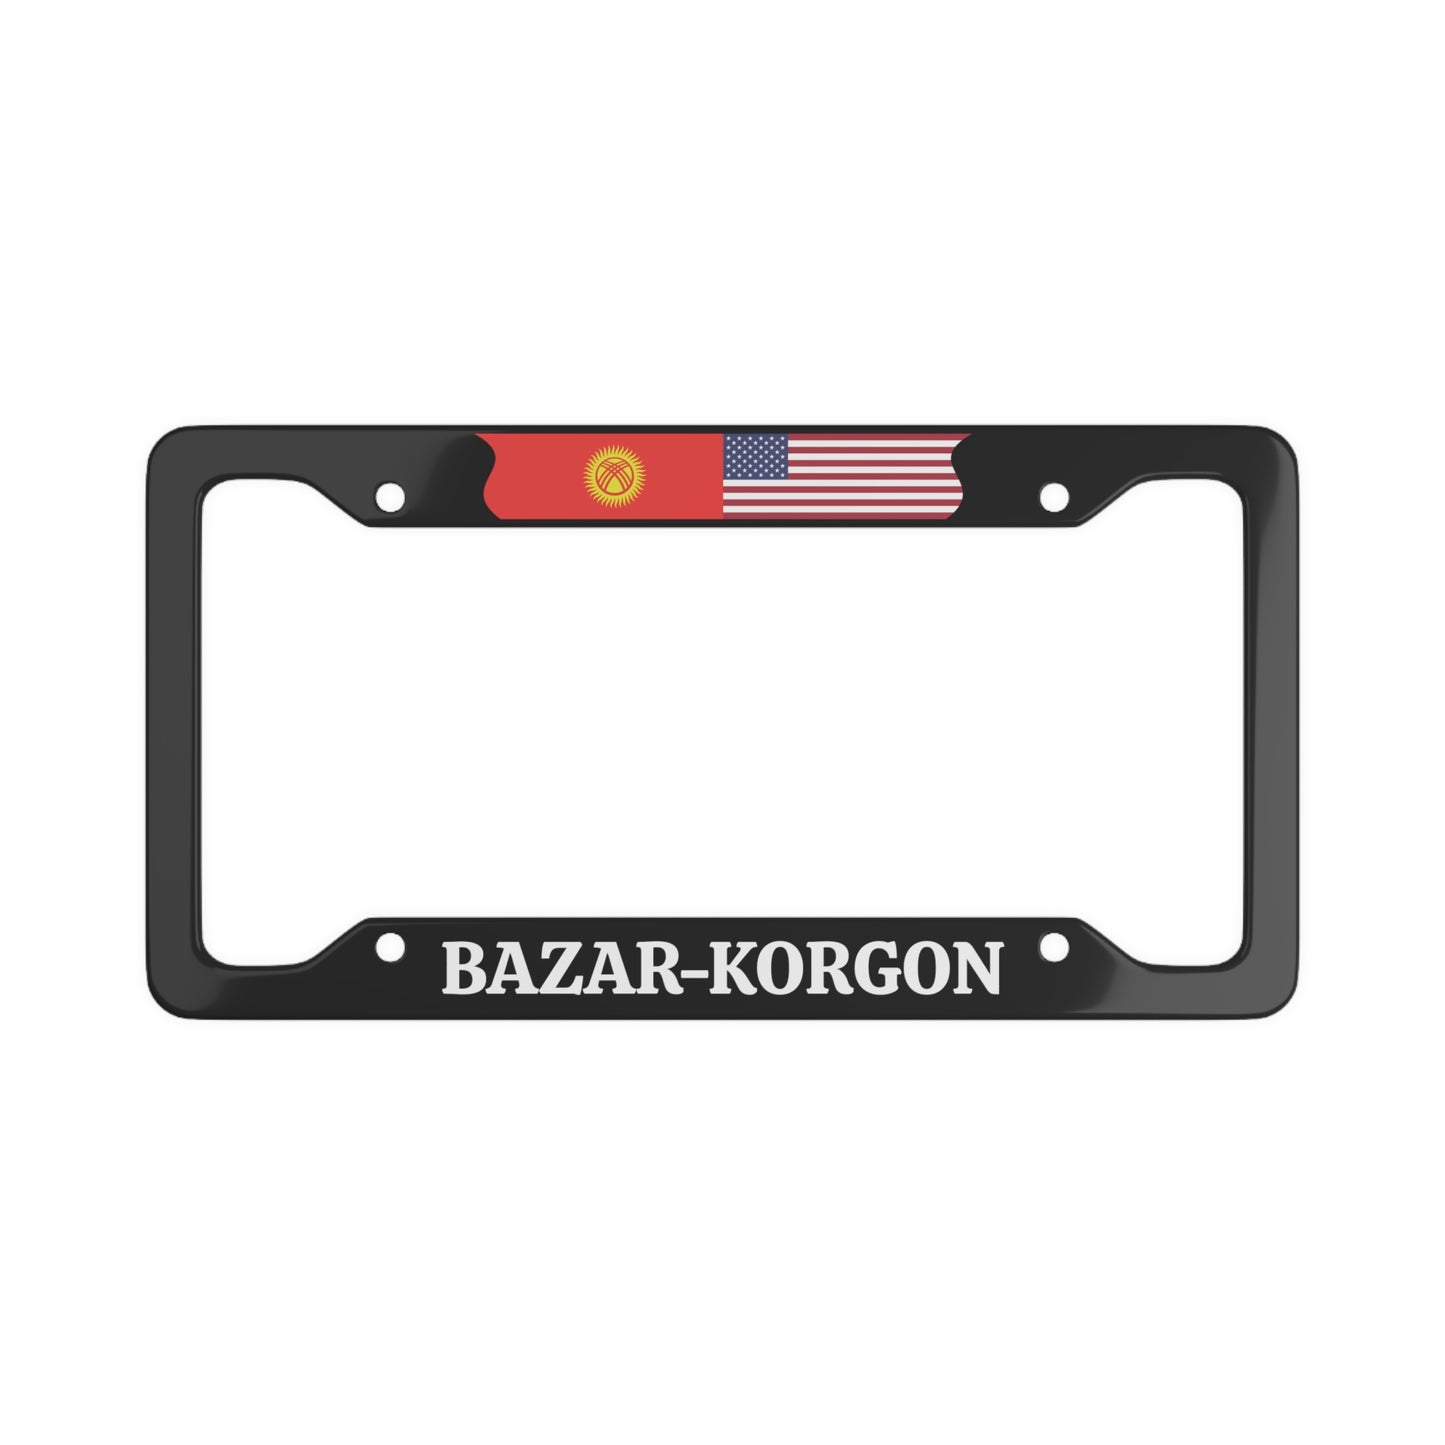 BAZAR-KORGON Kyrgyzstan with flag License Plate Frame